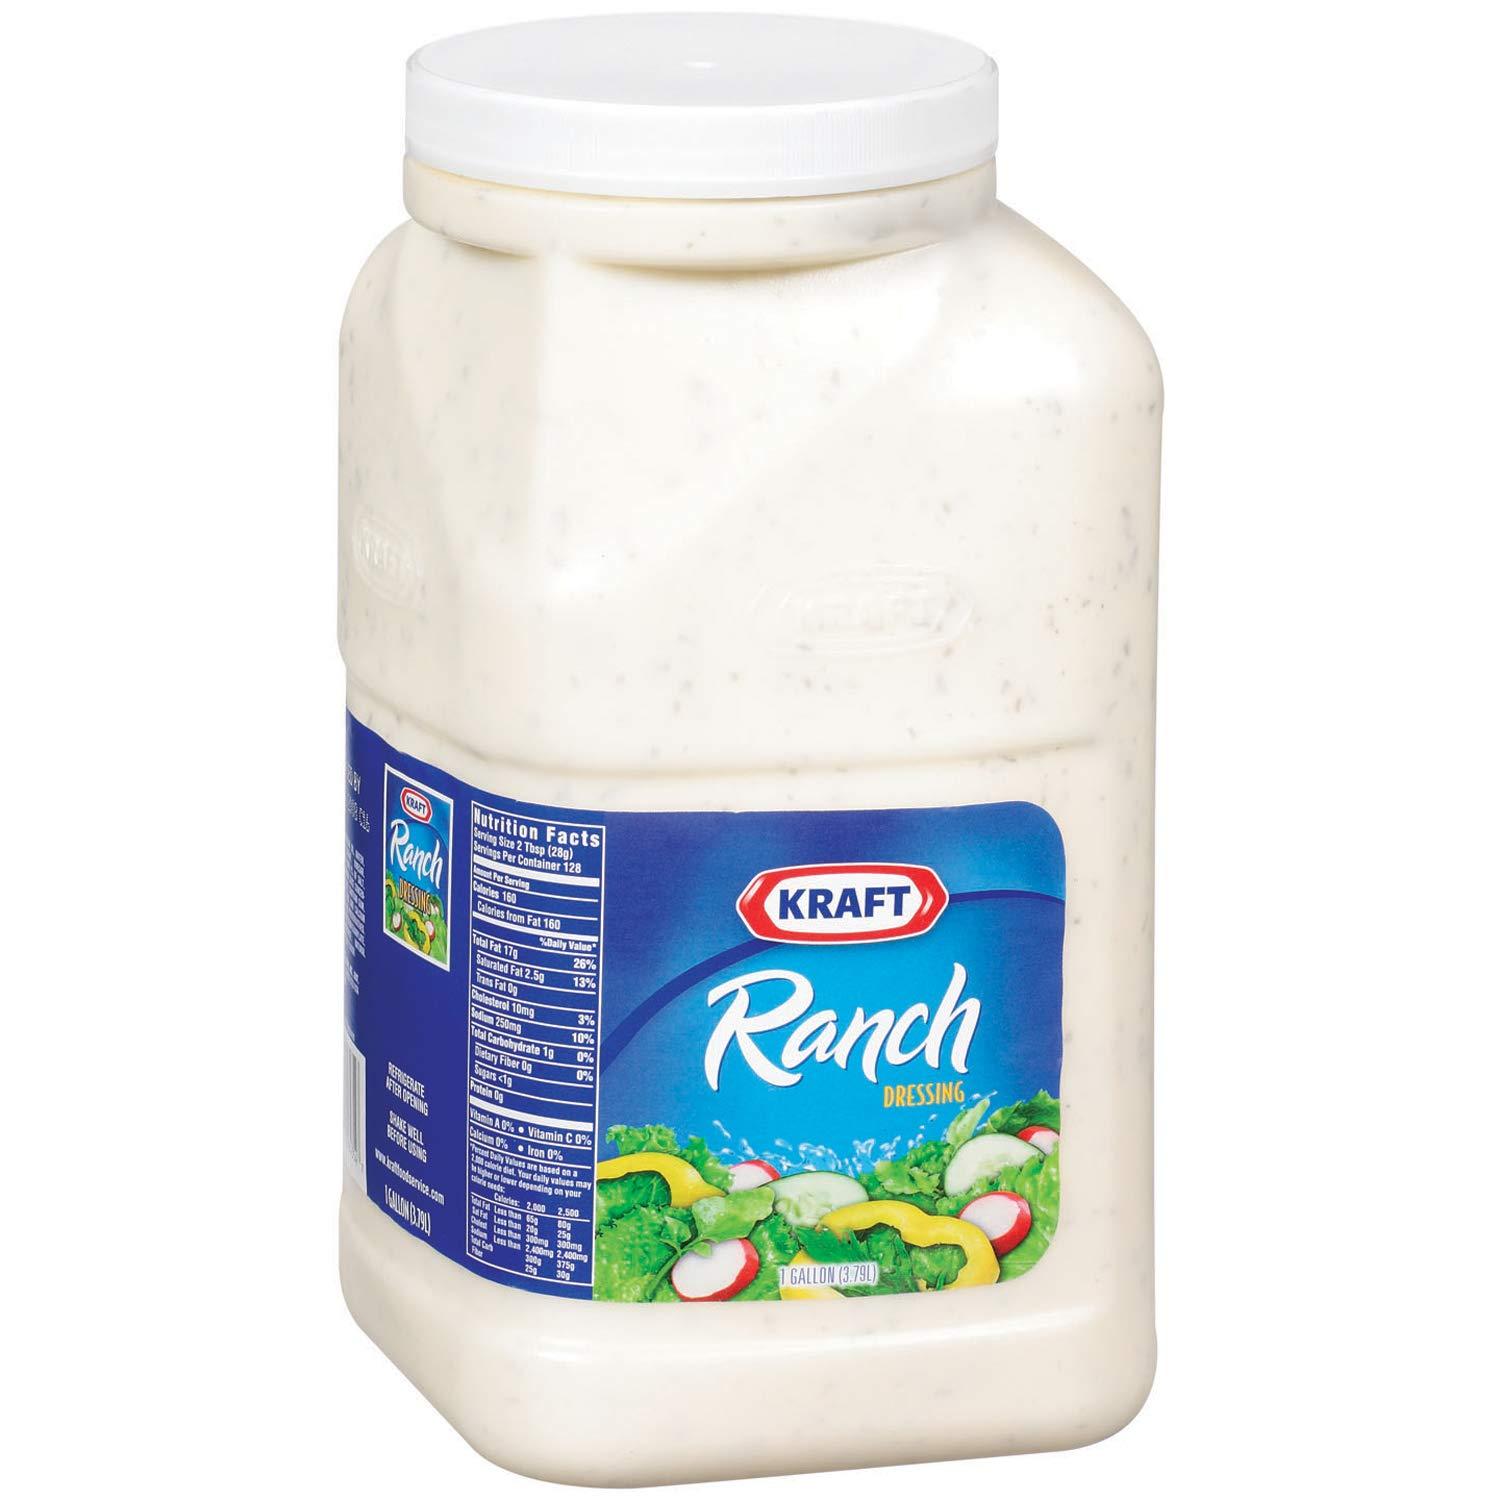 Kraft Ranch Salad Dressing (1 gal Jug) Ranch 128 Fl Oz (Pack of 1)